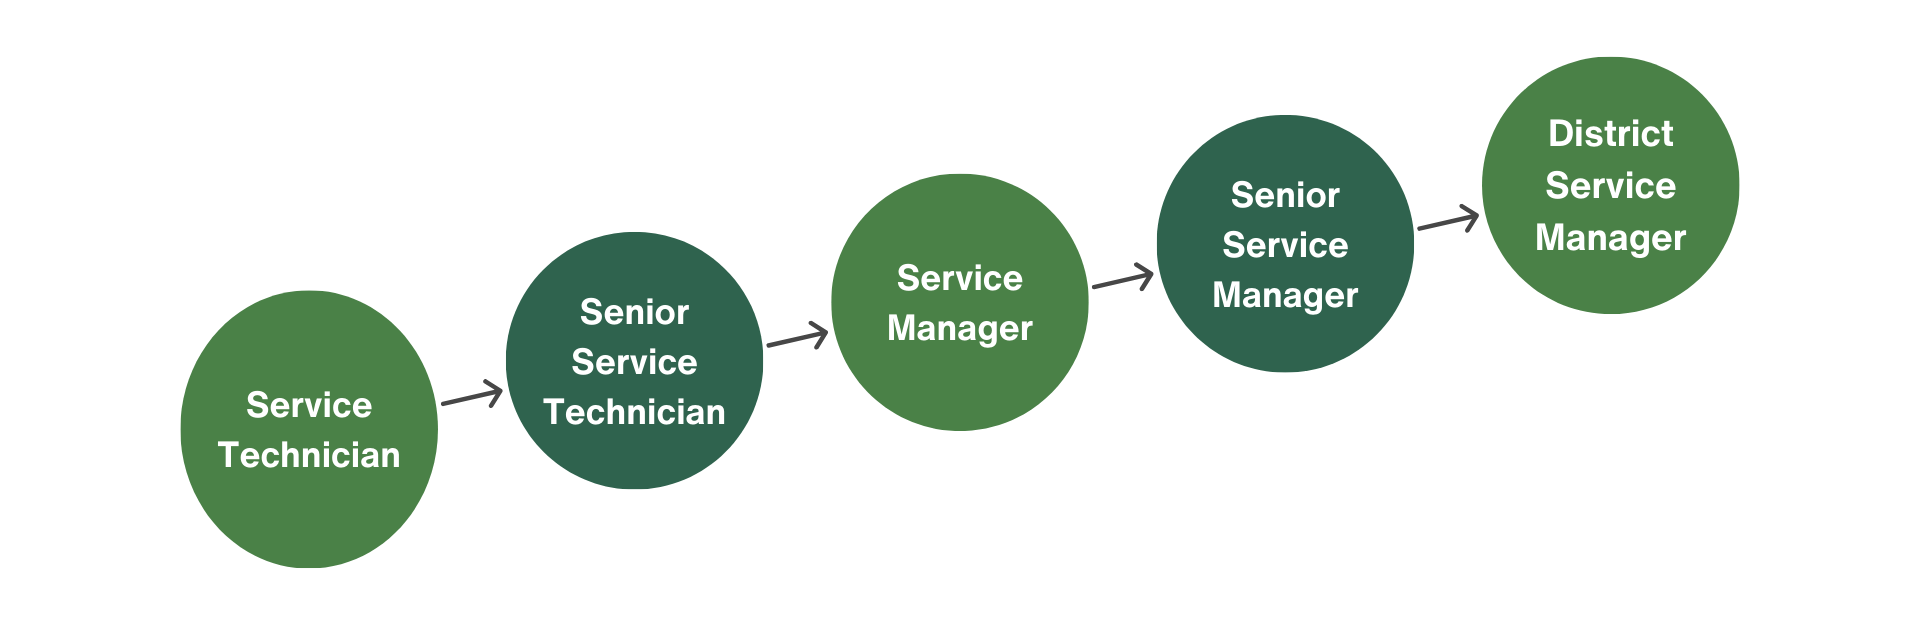 Service Team Path: Service Technician, Senior Service Technician, Service Manager, Senior Service Manager, District Service Manager